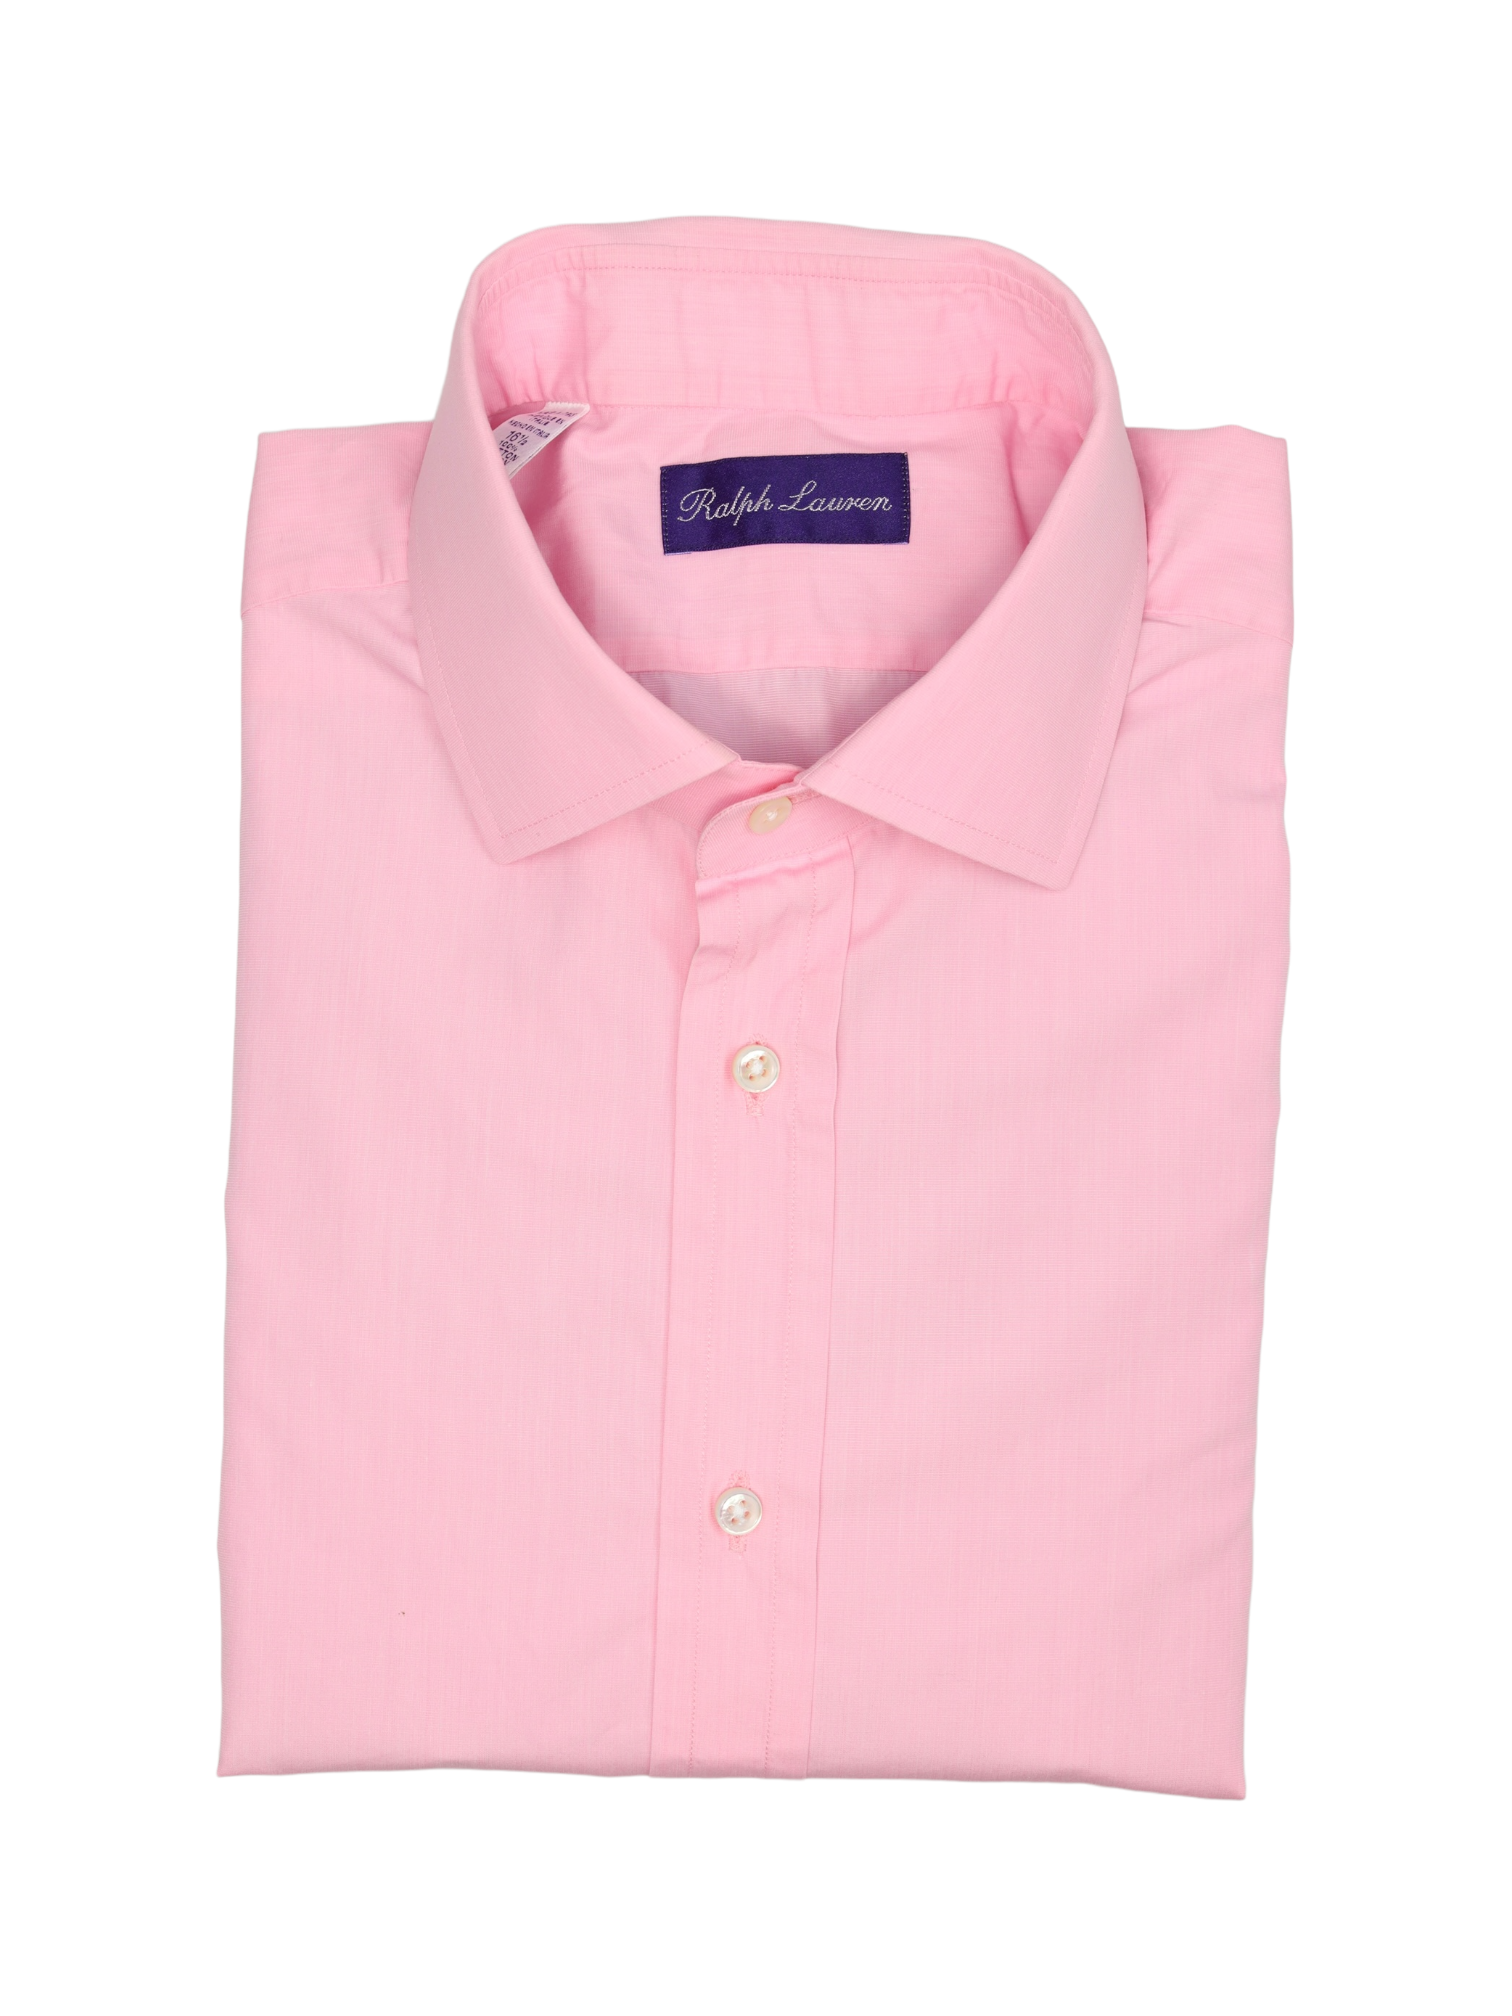 Ralph Lauren Purple Label Pink Shirt